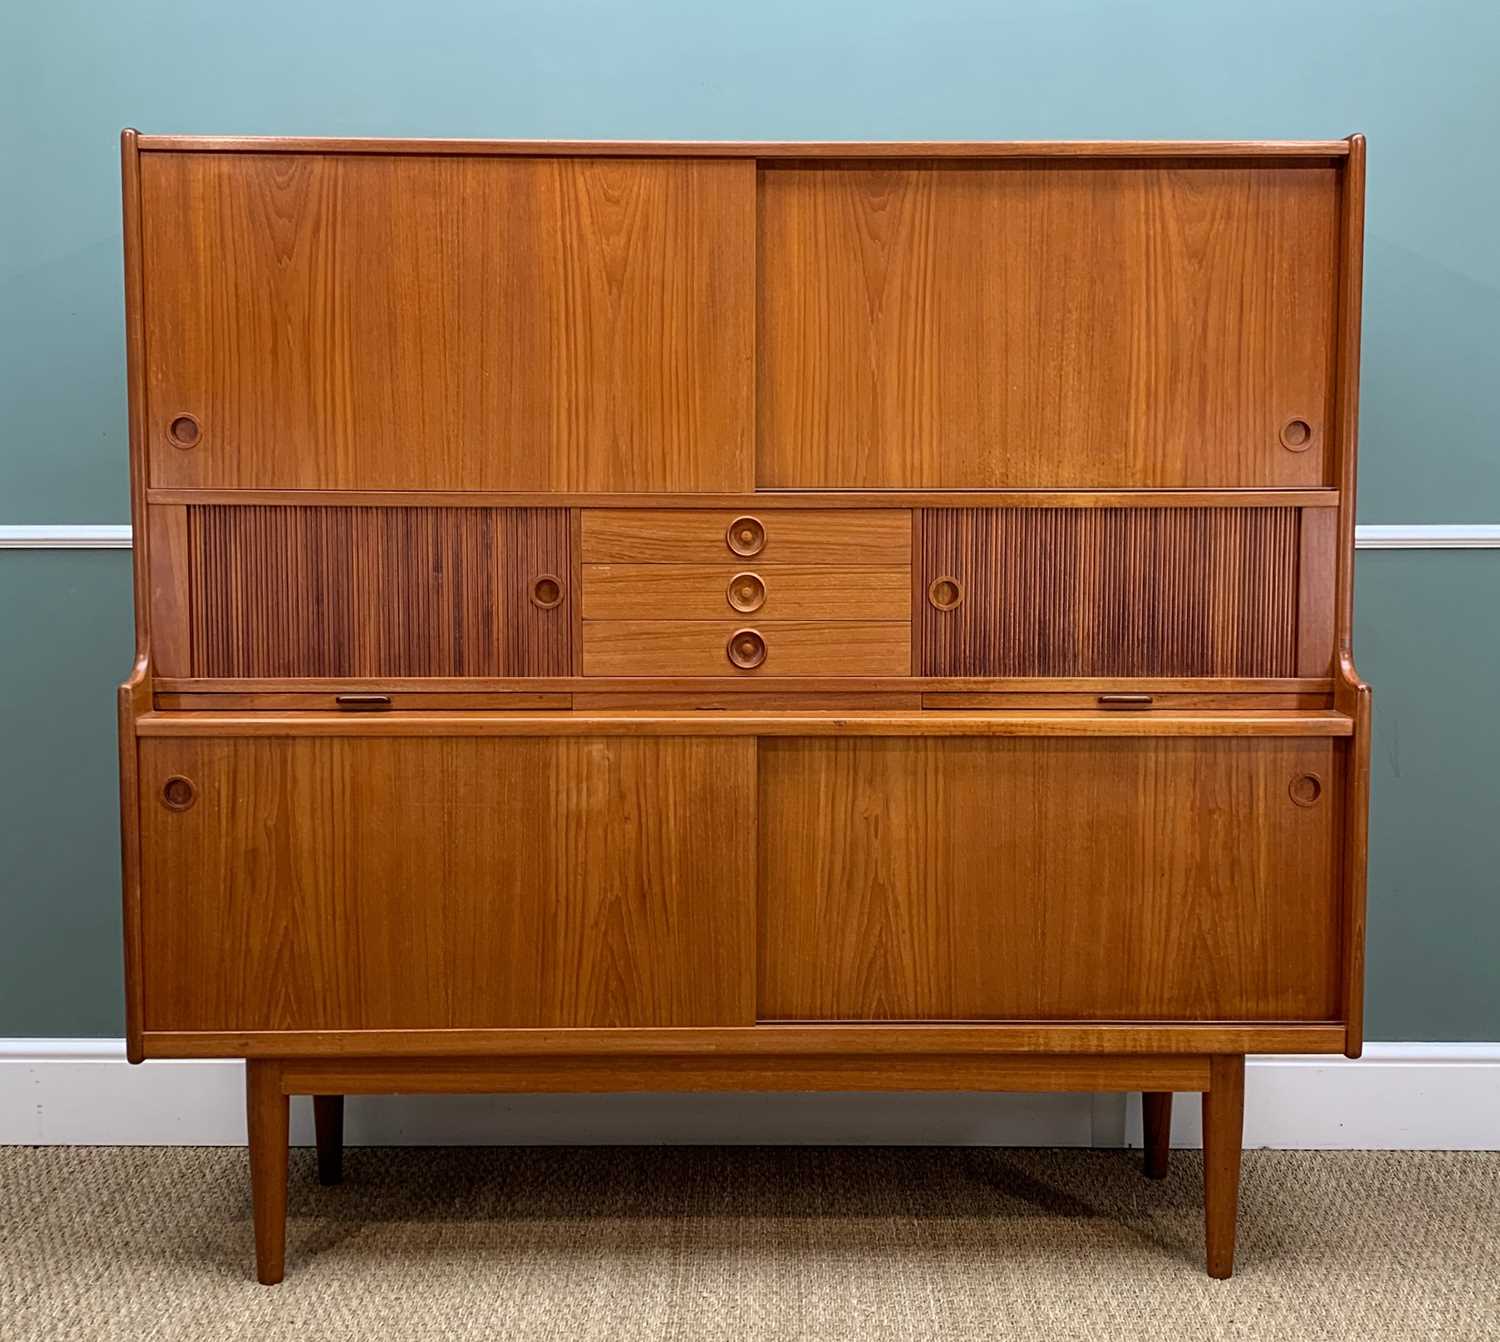 JOHANNES ANDERSON FOR ULDUM MOBELFABRIK: Danish teak cabinet, c. 1960s, fitted three registers of